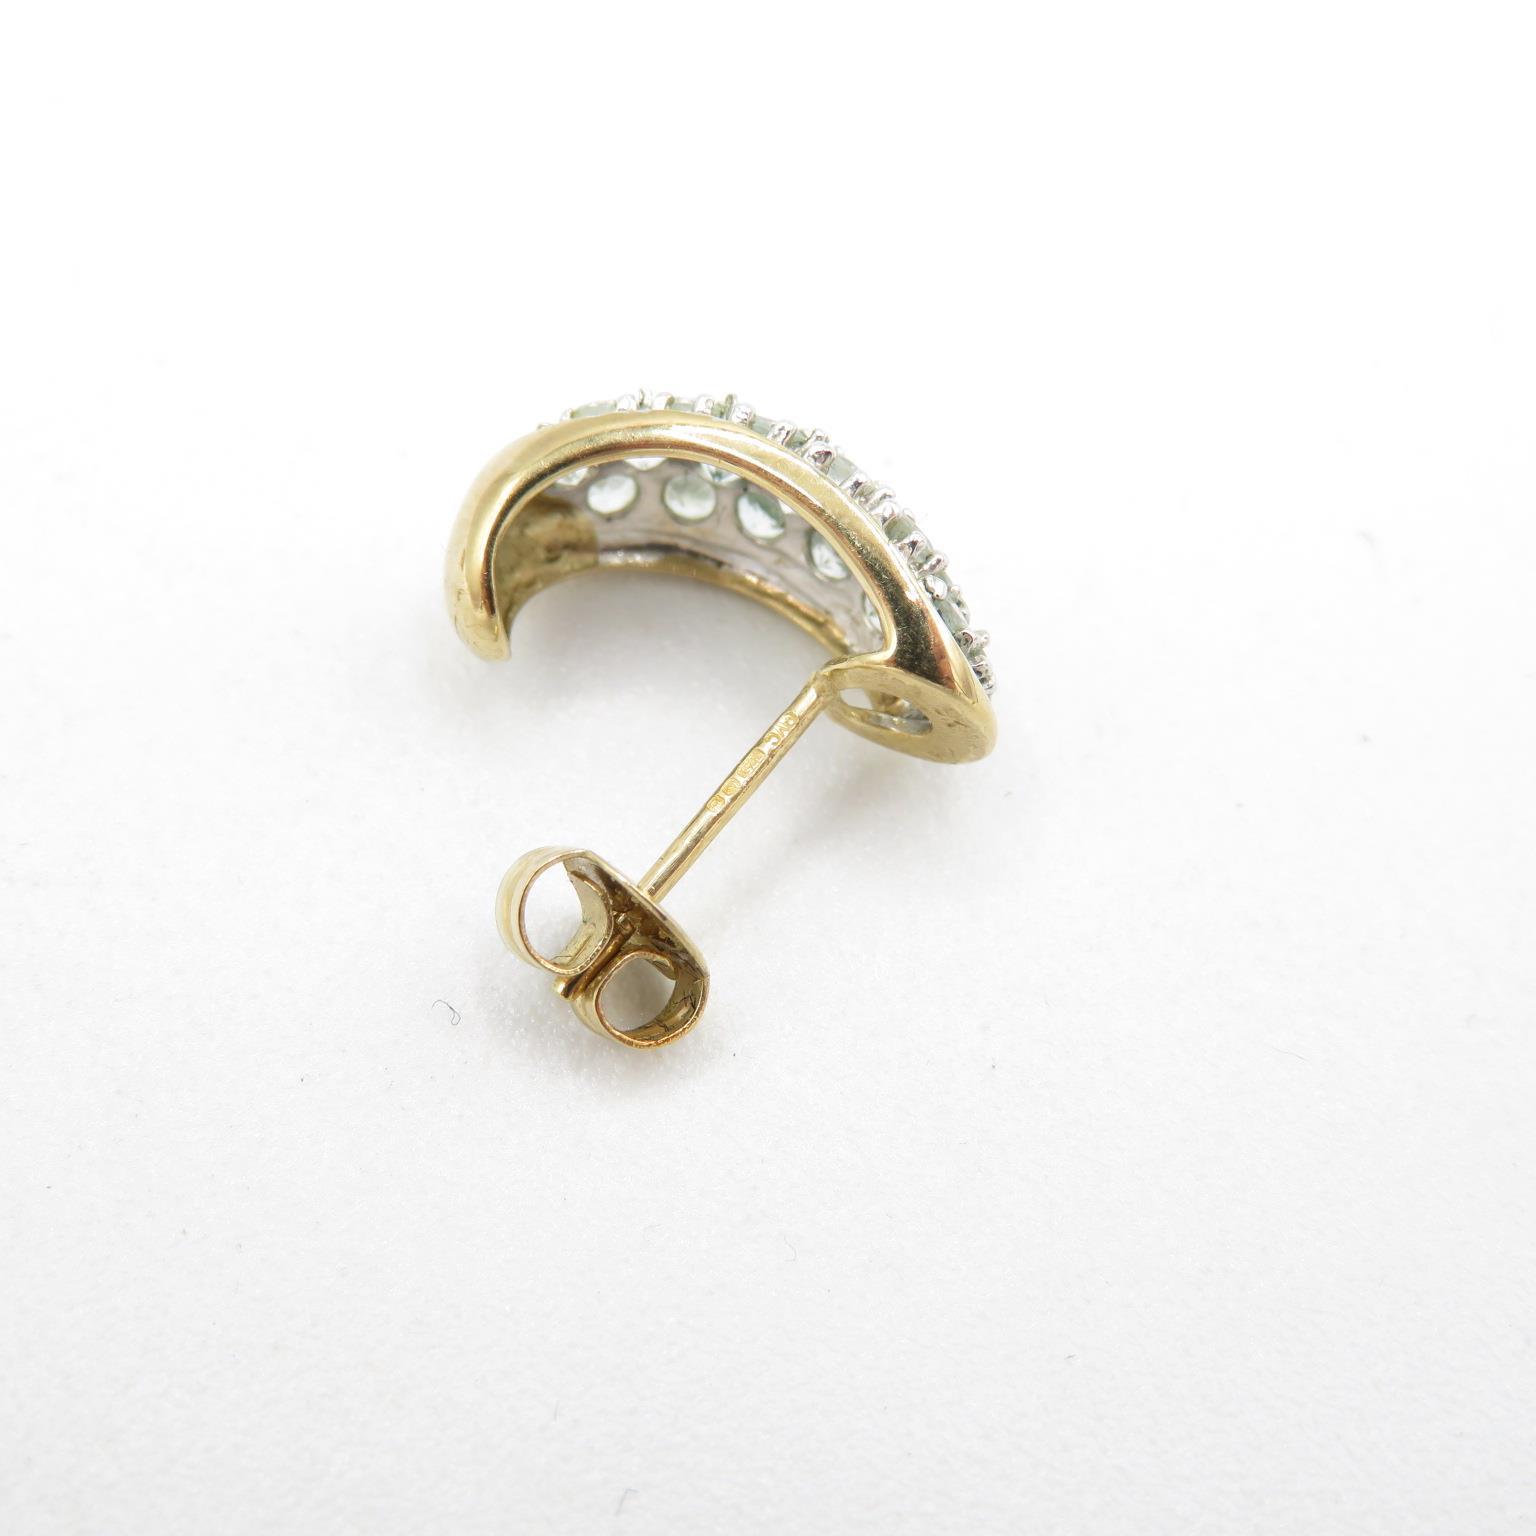 9ct gold blue gemstone c-hoop earrings with scroll backs - 2.6 g - Image 5 of 5